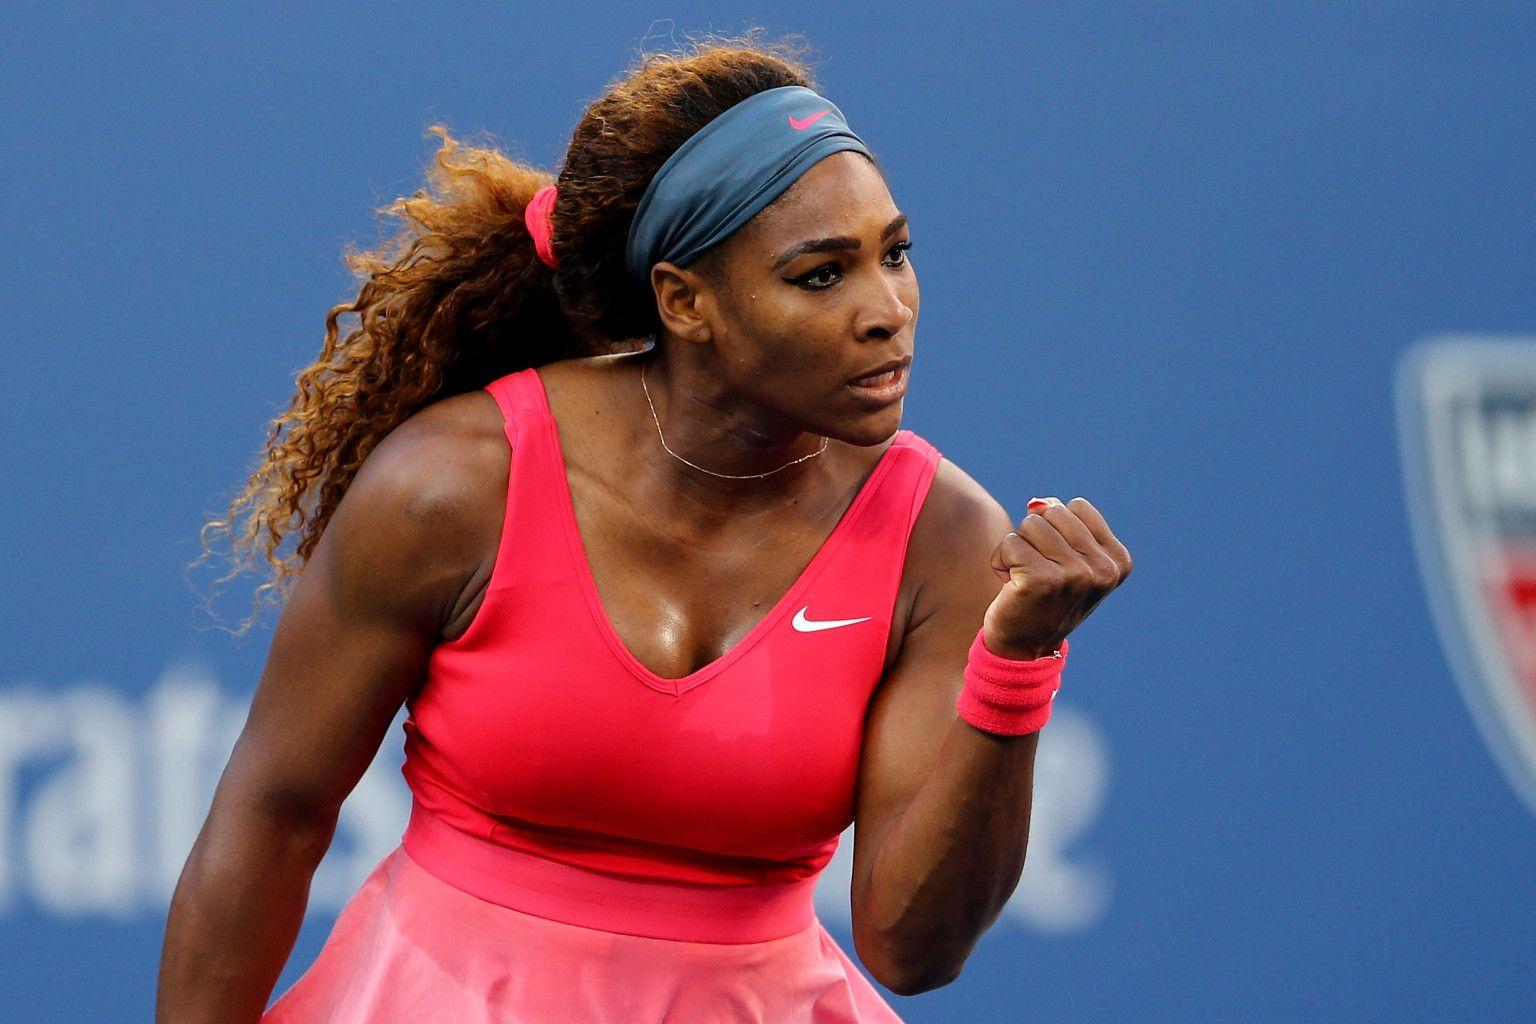 Serena Williams 2018: Hair, Eyes, Feet, Legs, Style, Weight & No